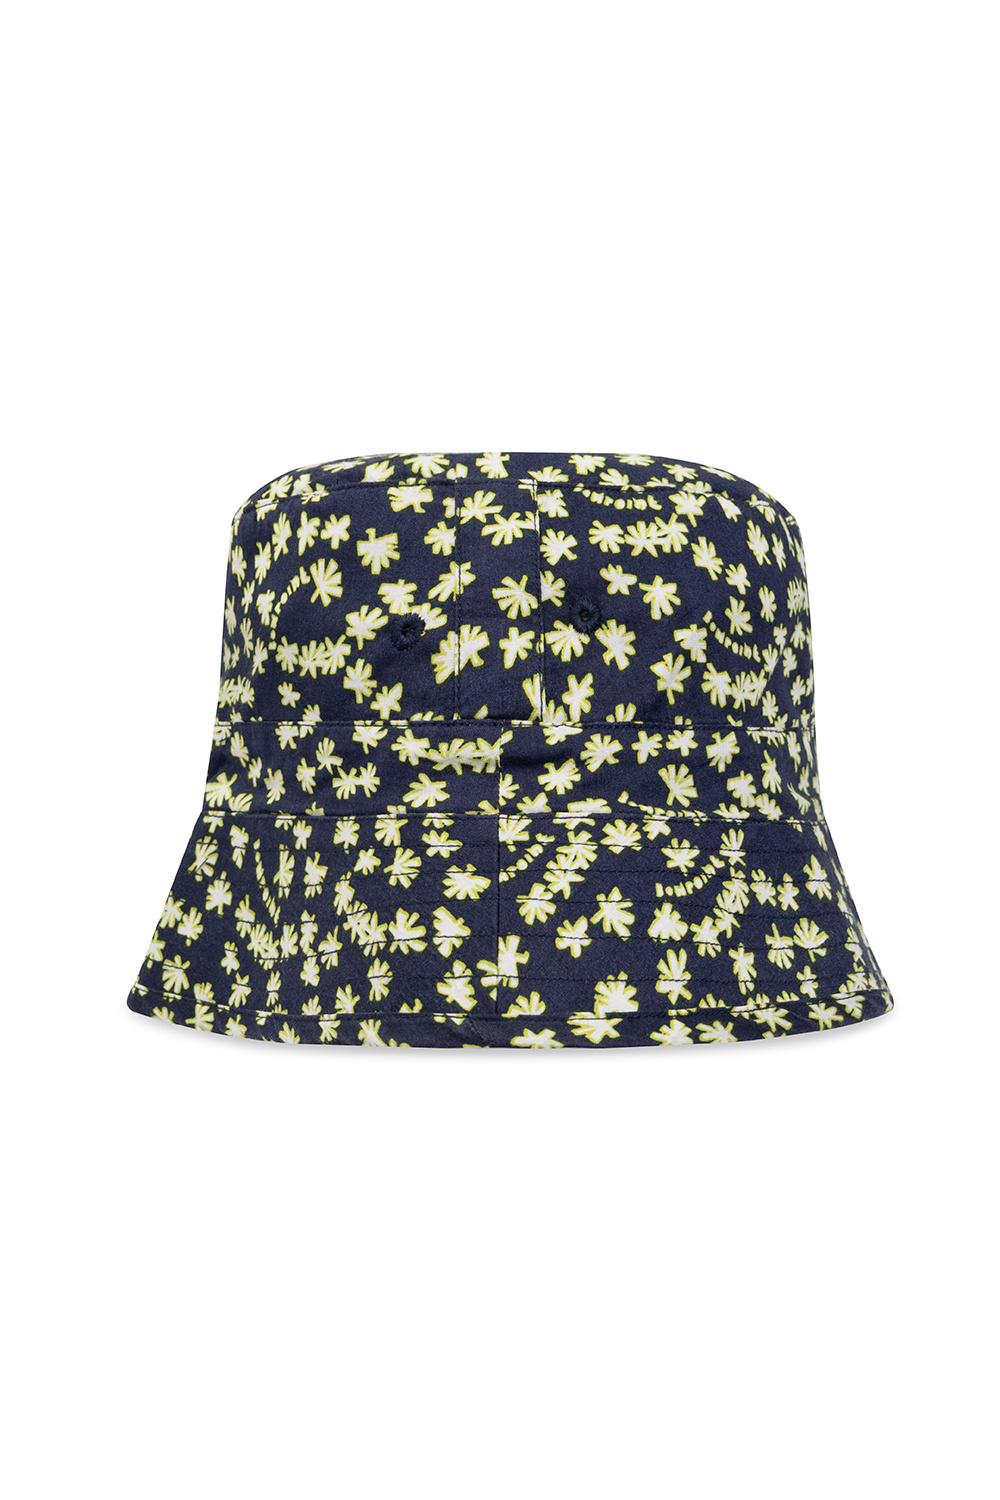 Bonpoint  Bucket hat storage with floral motif